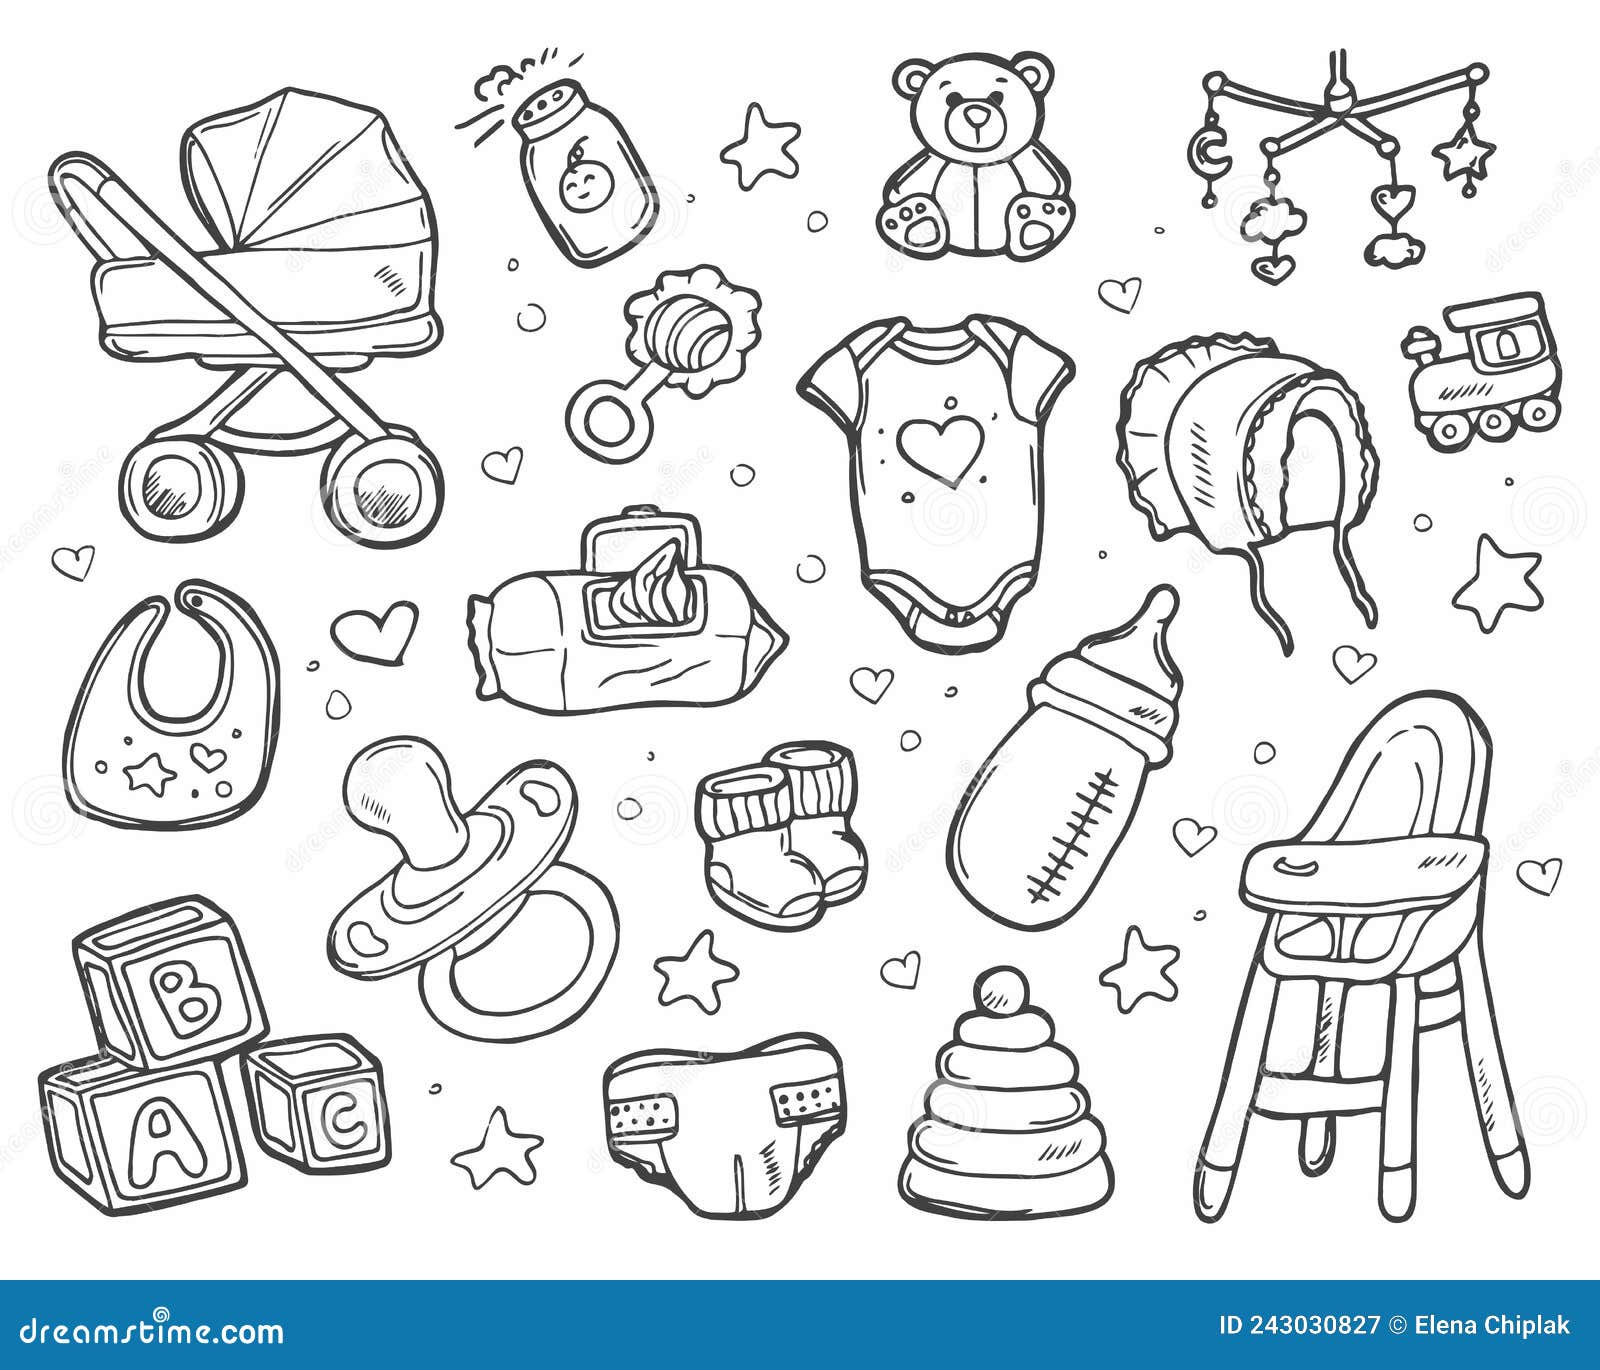 Doodle Baby Nursery Icons Set. Vector New Born Sketch Stock Vector ...